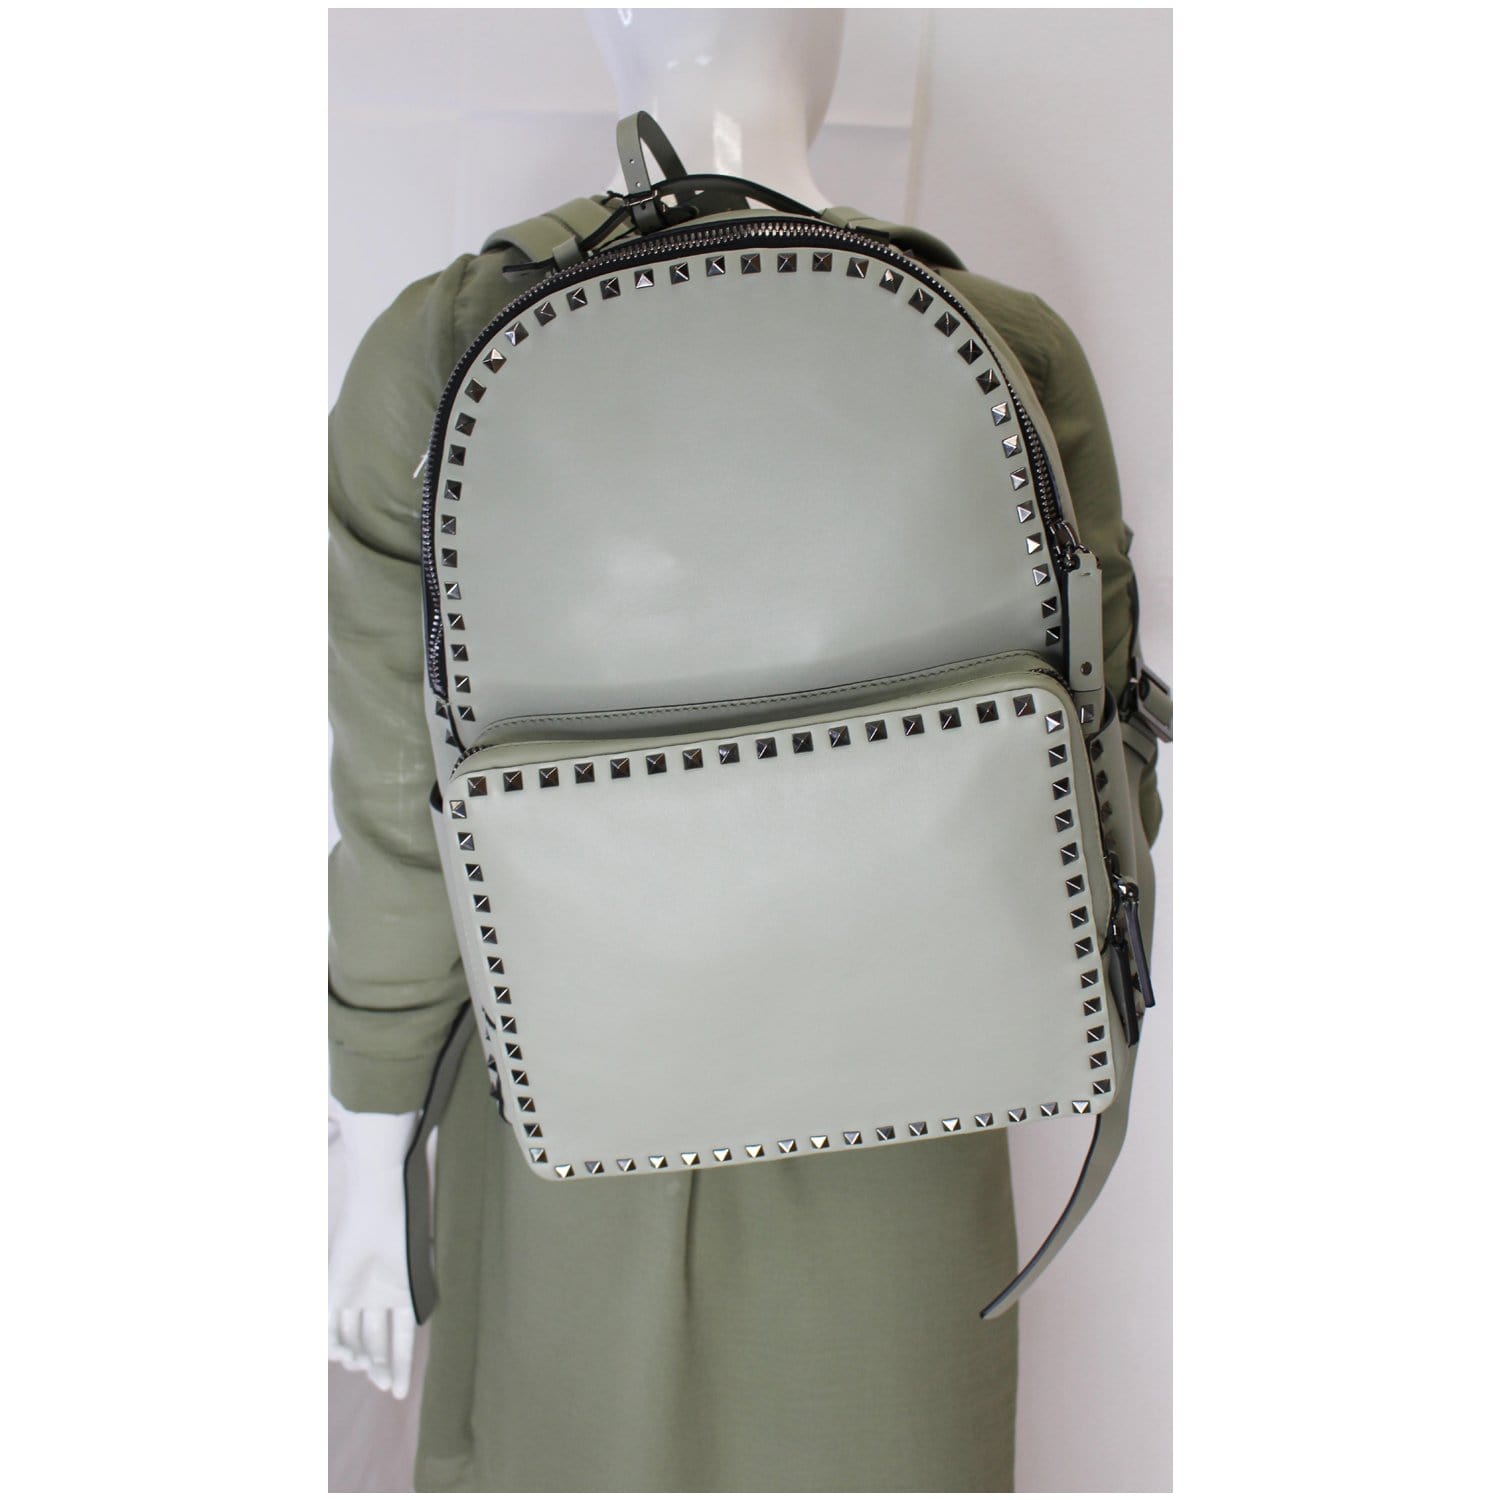 VALENTINO Garavani Rockstud Leather Backpack Light Green - 20% OFF